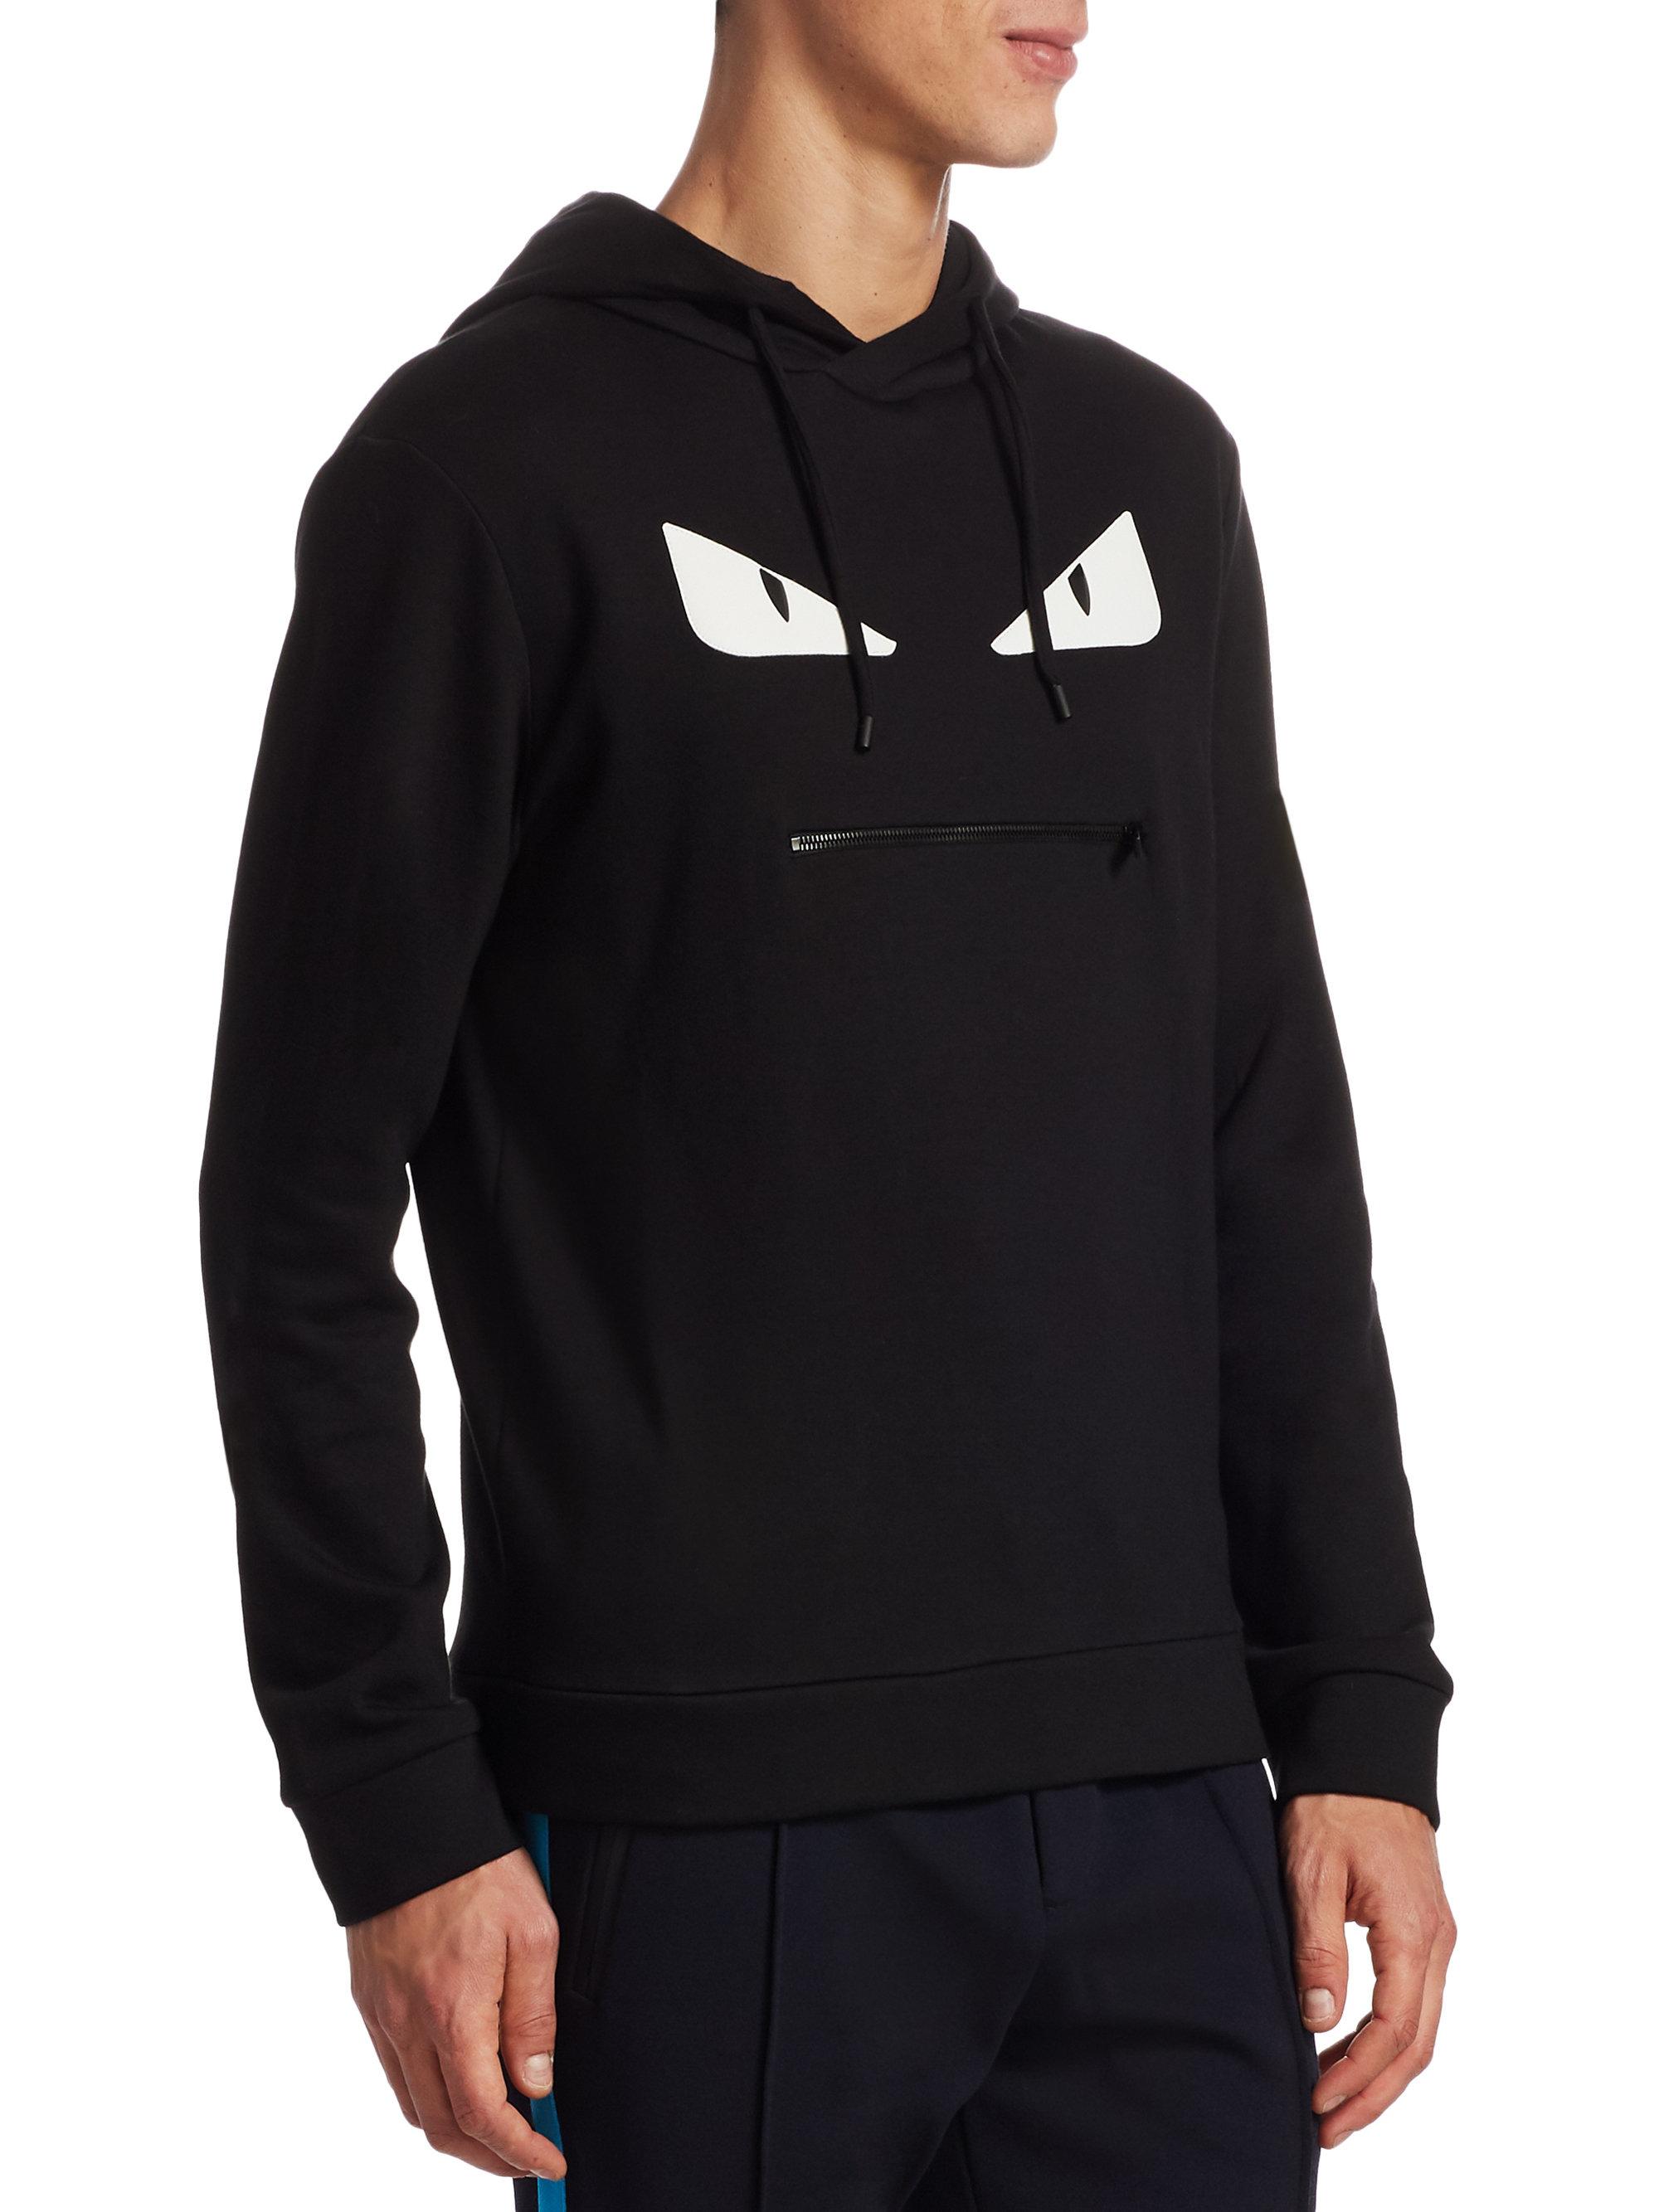 Fendi Cotton Monster Zip Mouth Sweatshirt in Black for Men - Lyst